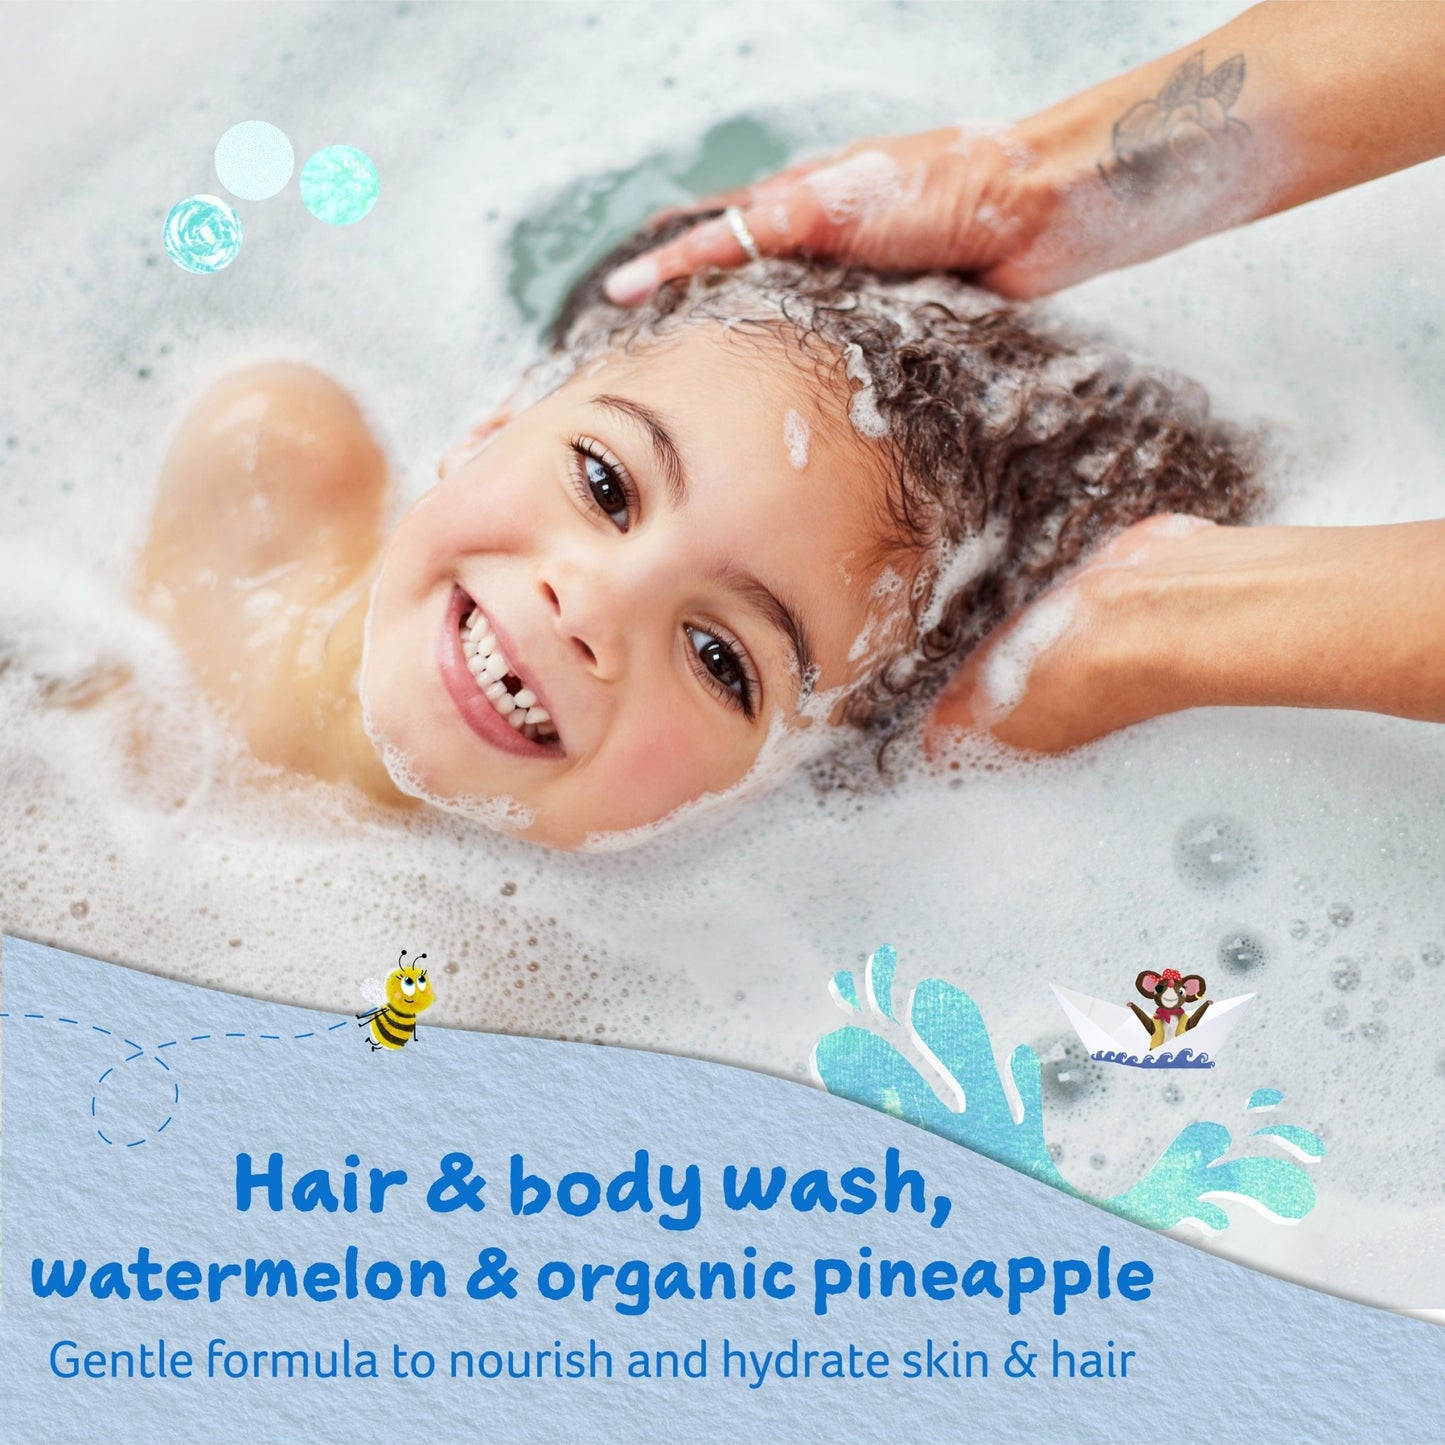 [STAFF] hair & body wash watermelon & organic pineapple